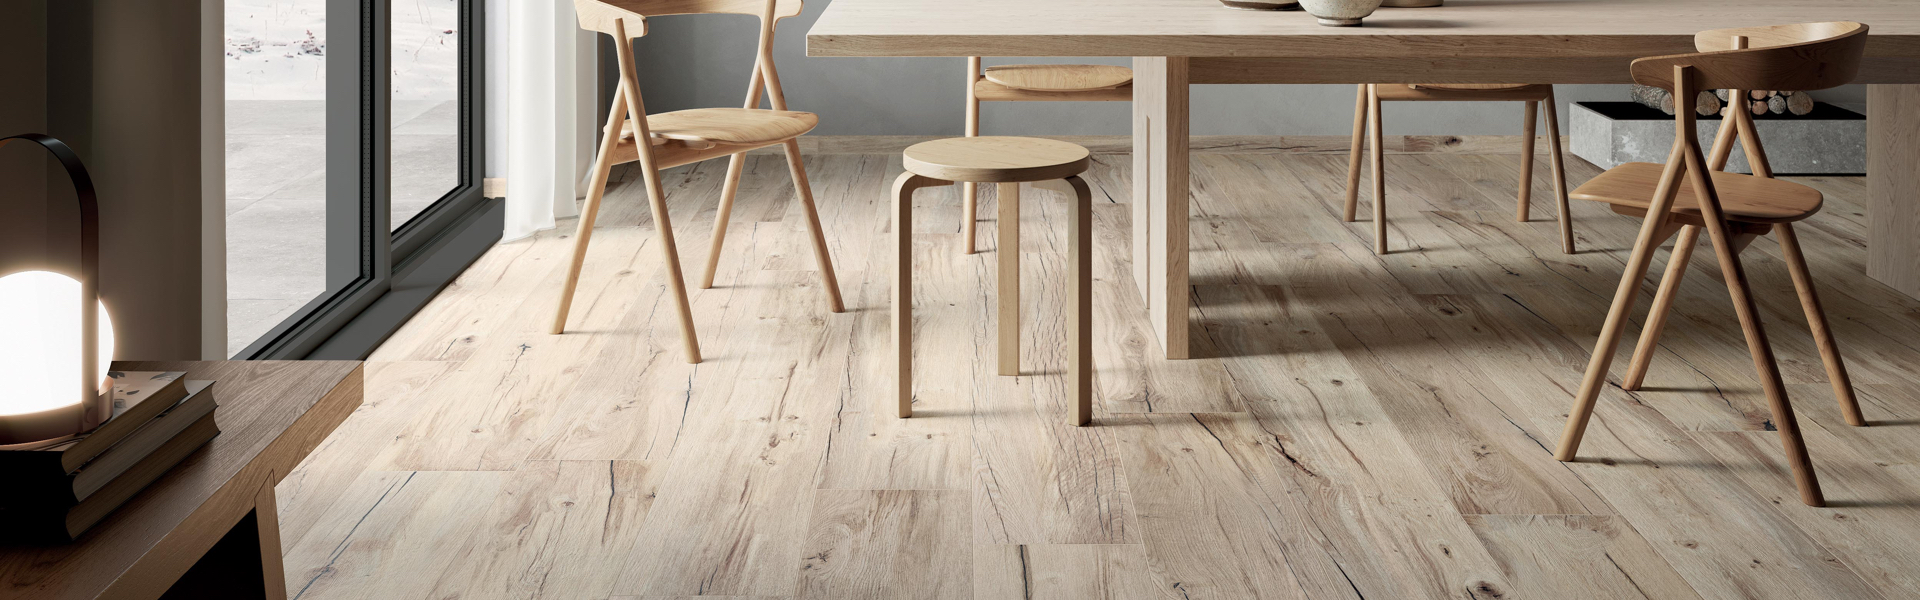 Floorin - Flaviker Nordic Wood